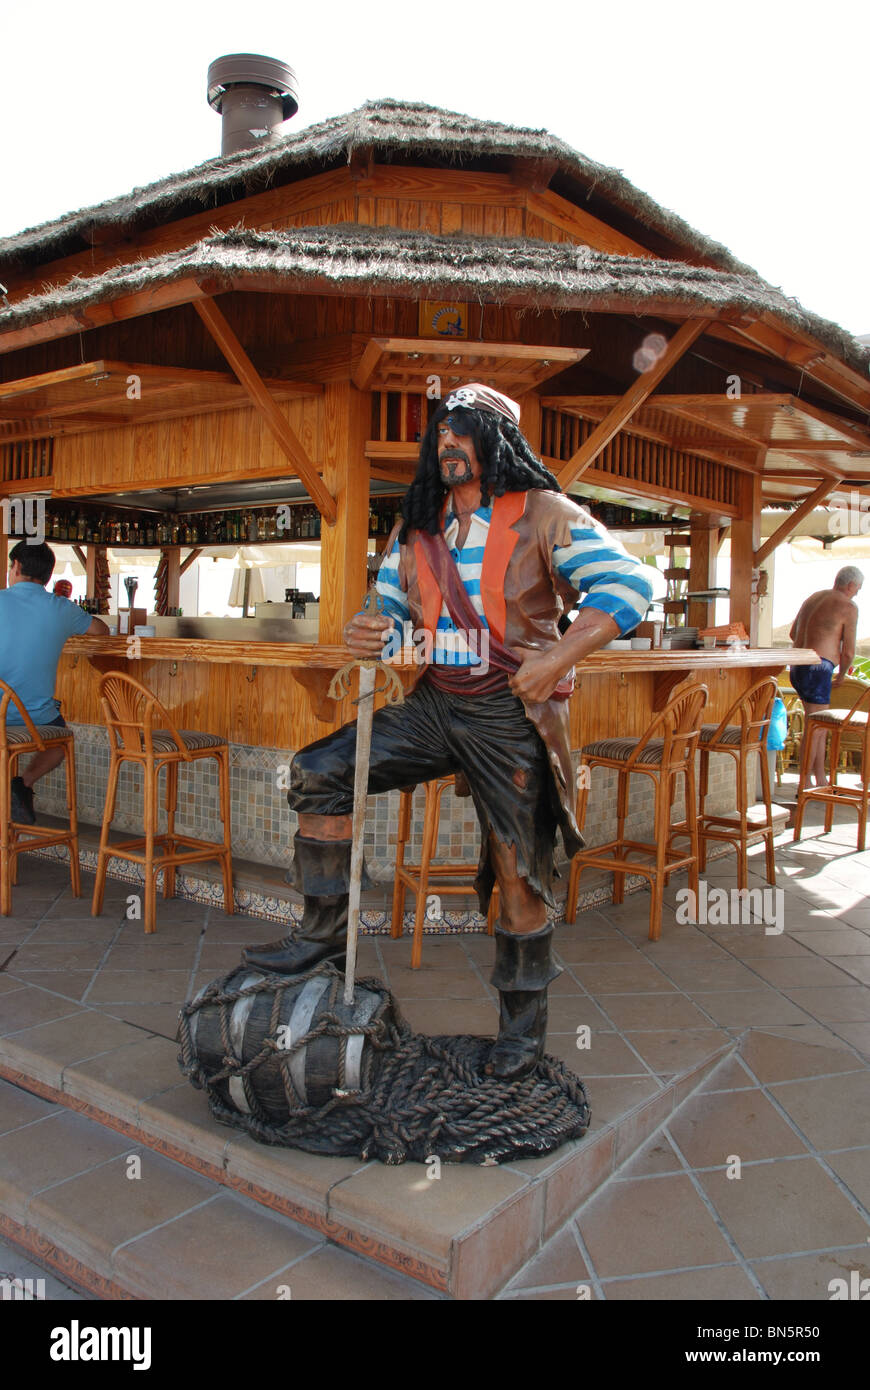 Bar de plage (chiringuito) avec un pirate statue en premier plan, Torremolinos, Costa del Sol, la province de Malaga, Andalousie, espagne. Banque D'Images